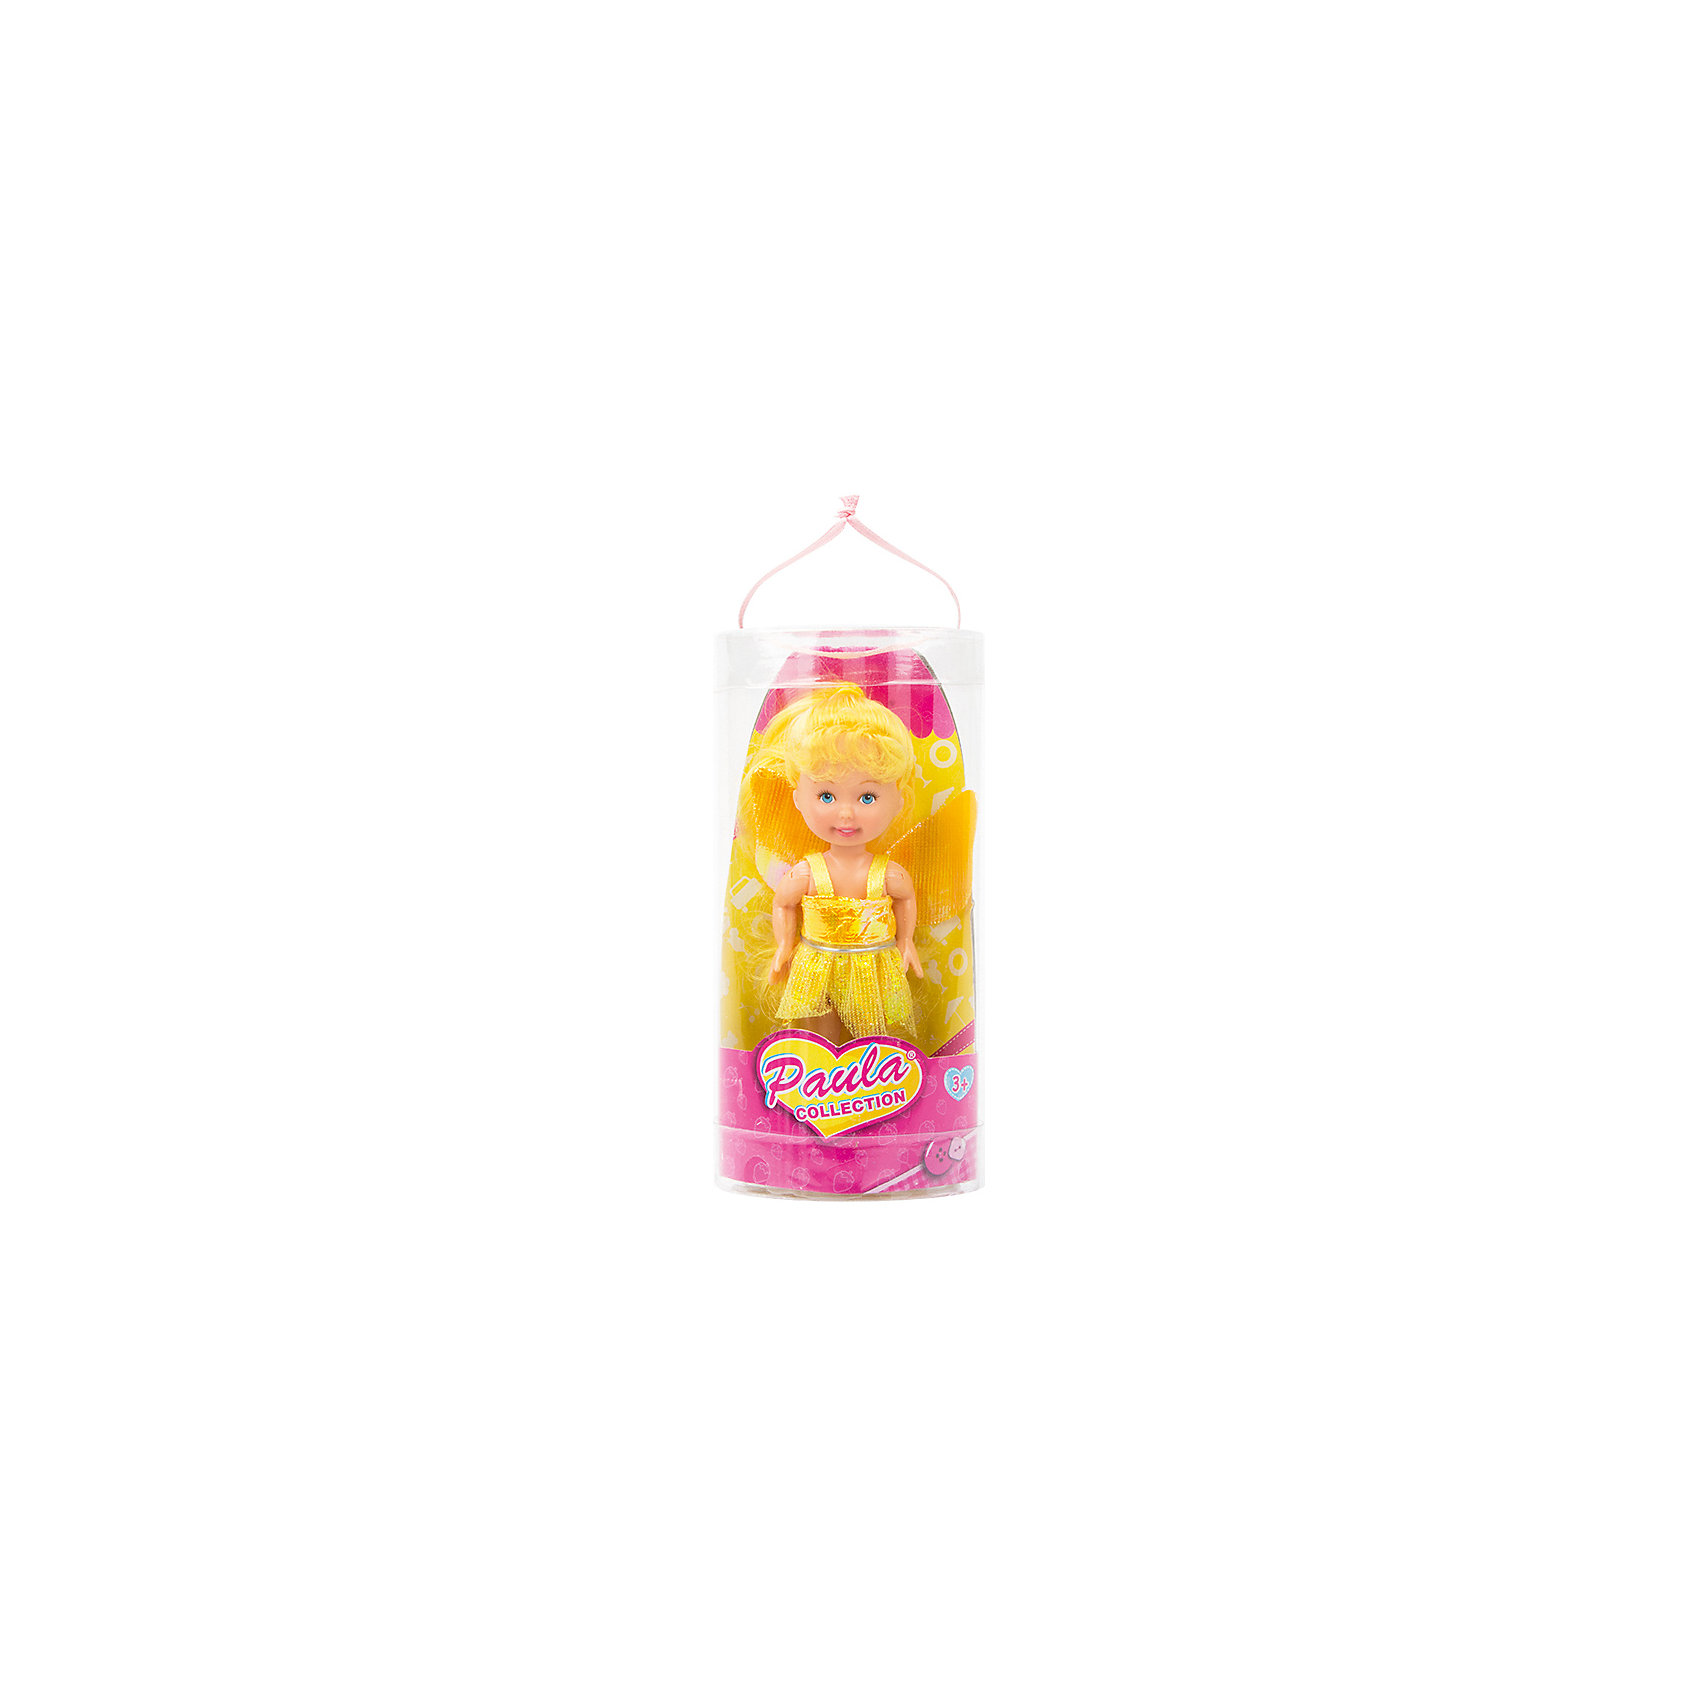 Кукла "Волшебство: фея в желтом" PAULA 12505248